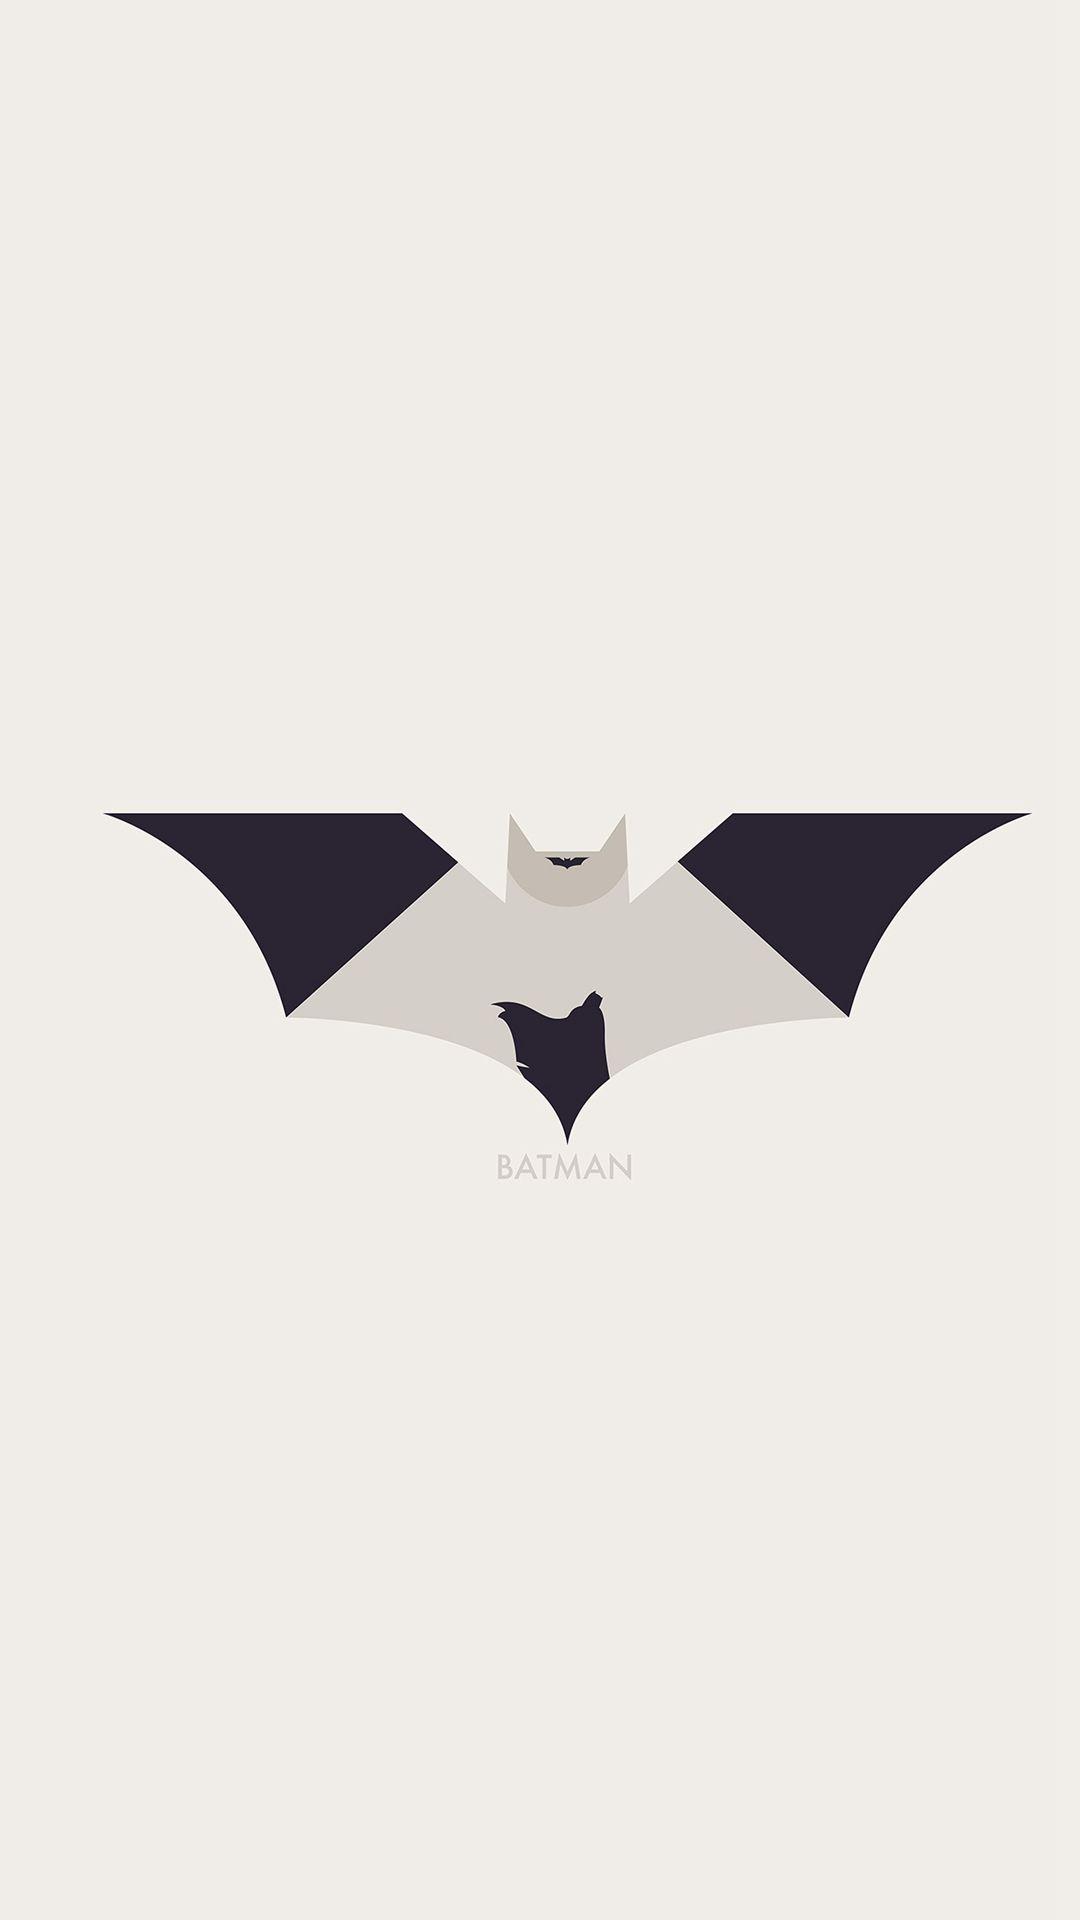 Art Batman Minimal Logo Illust iPhone 6 Wallpaper Download. iPhone Wallpaper, iPad wallpaper On. Batman wallpaper, Superhero wallpaper, Batman wallpaper iphone